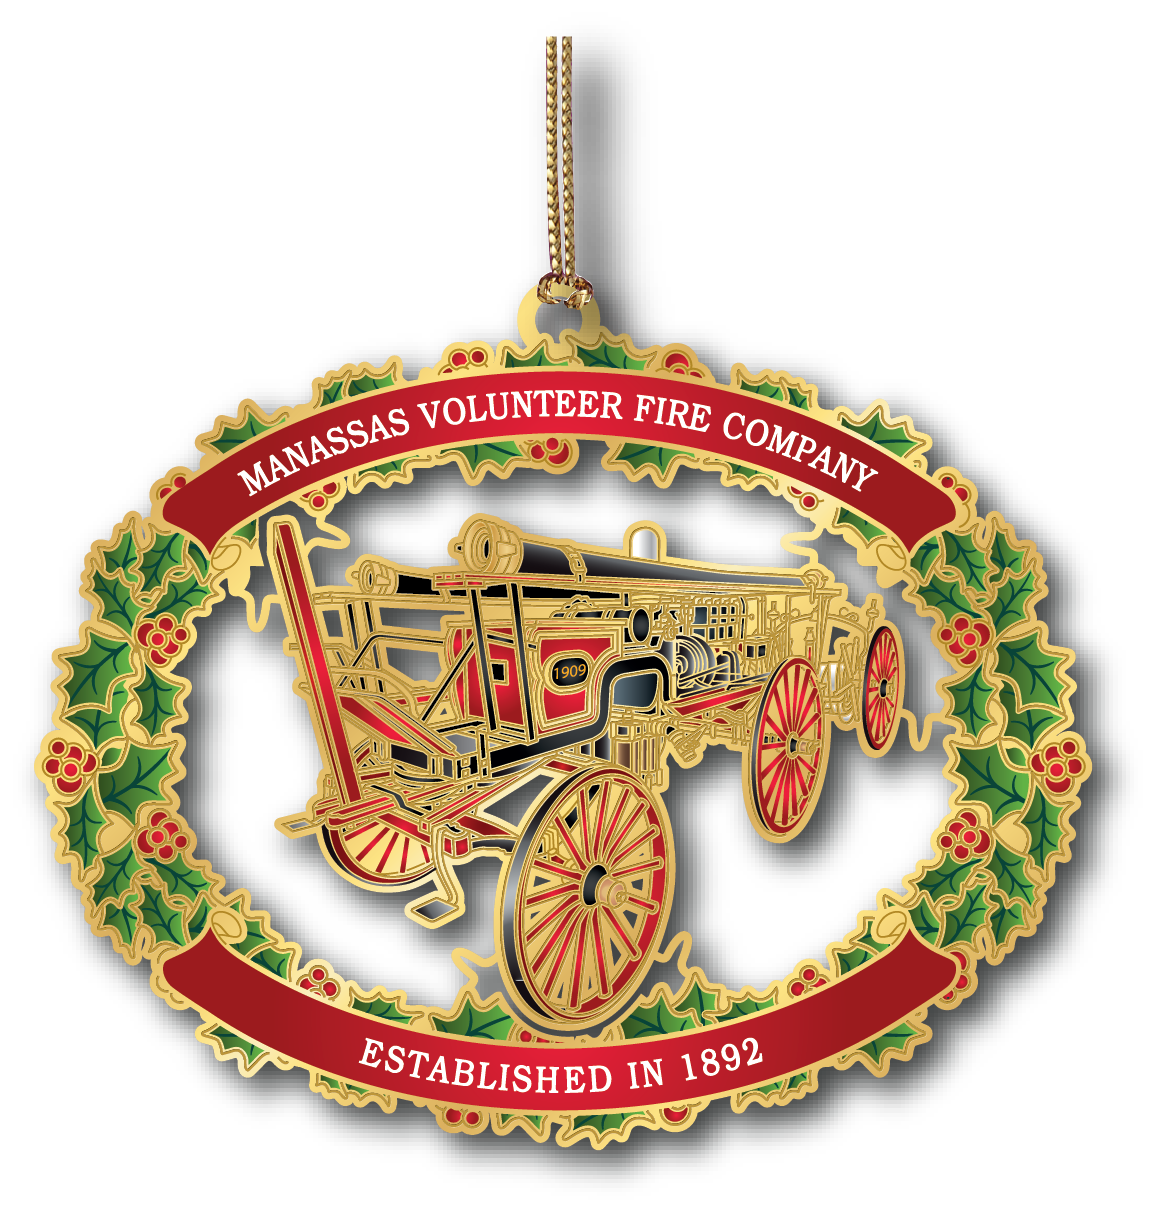 64471_Manassas Volunteer Fire Company